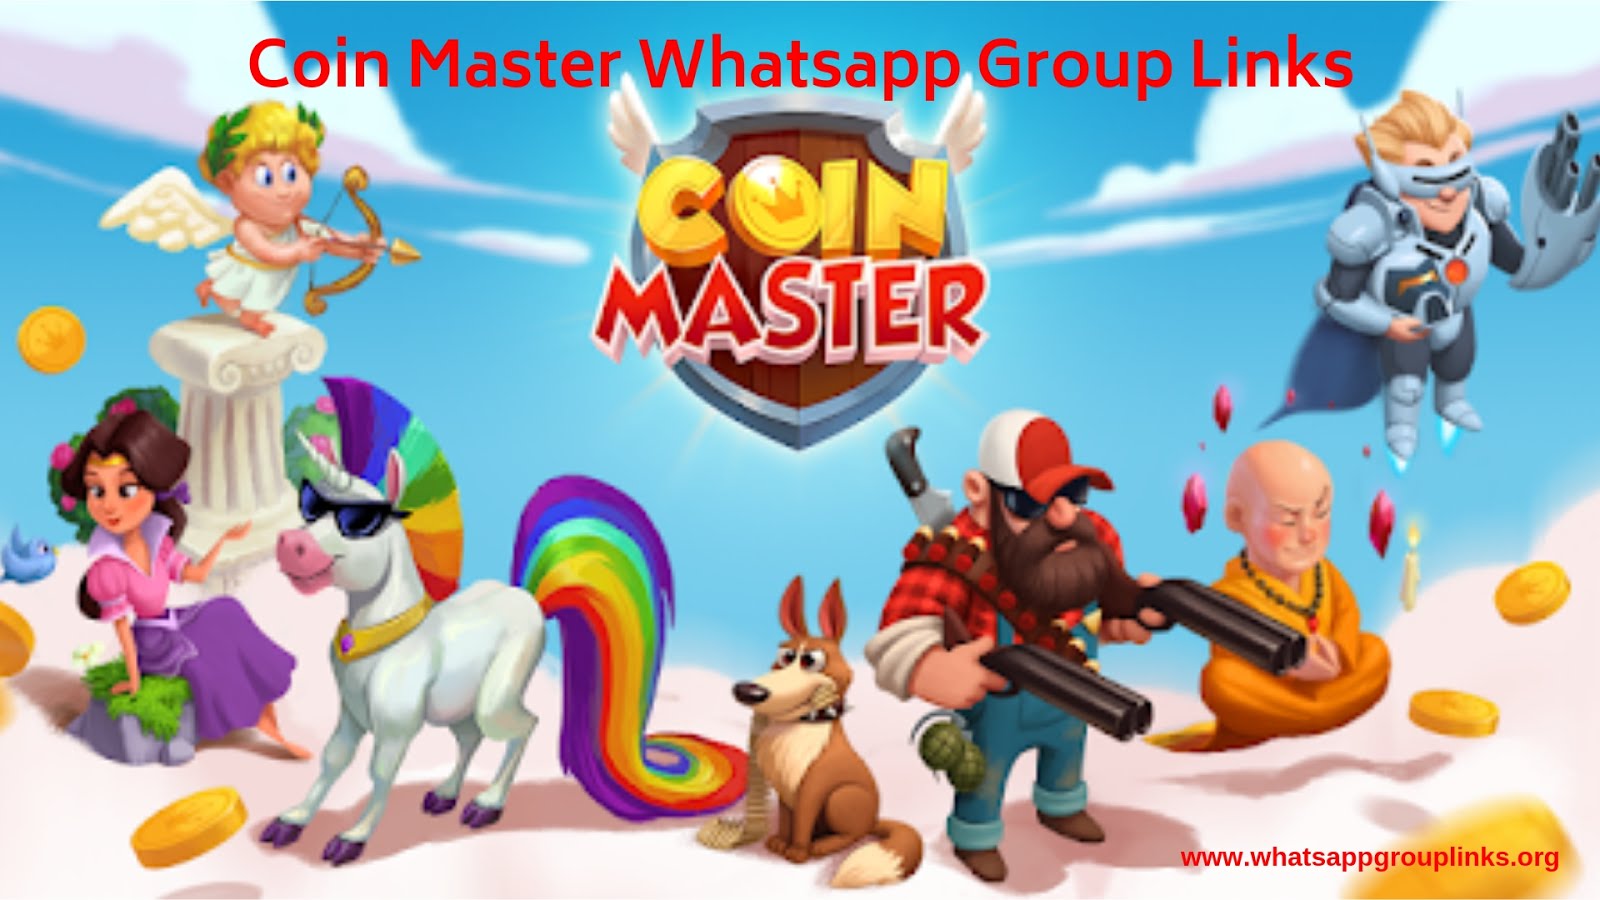 Coin master whatsapp group web